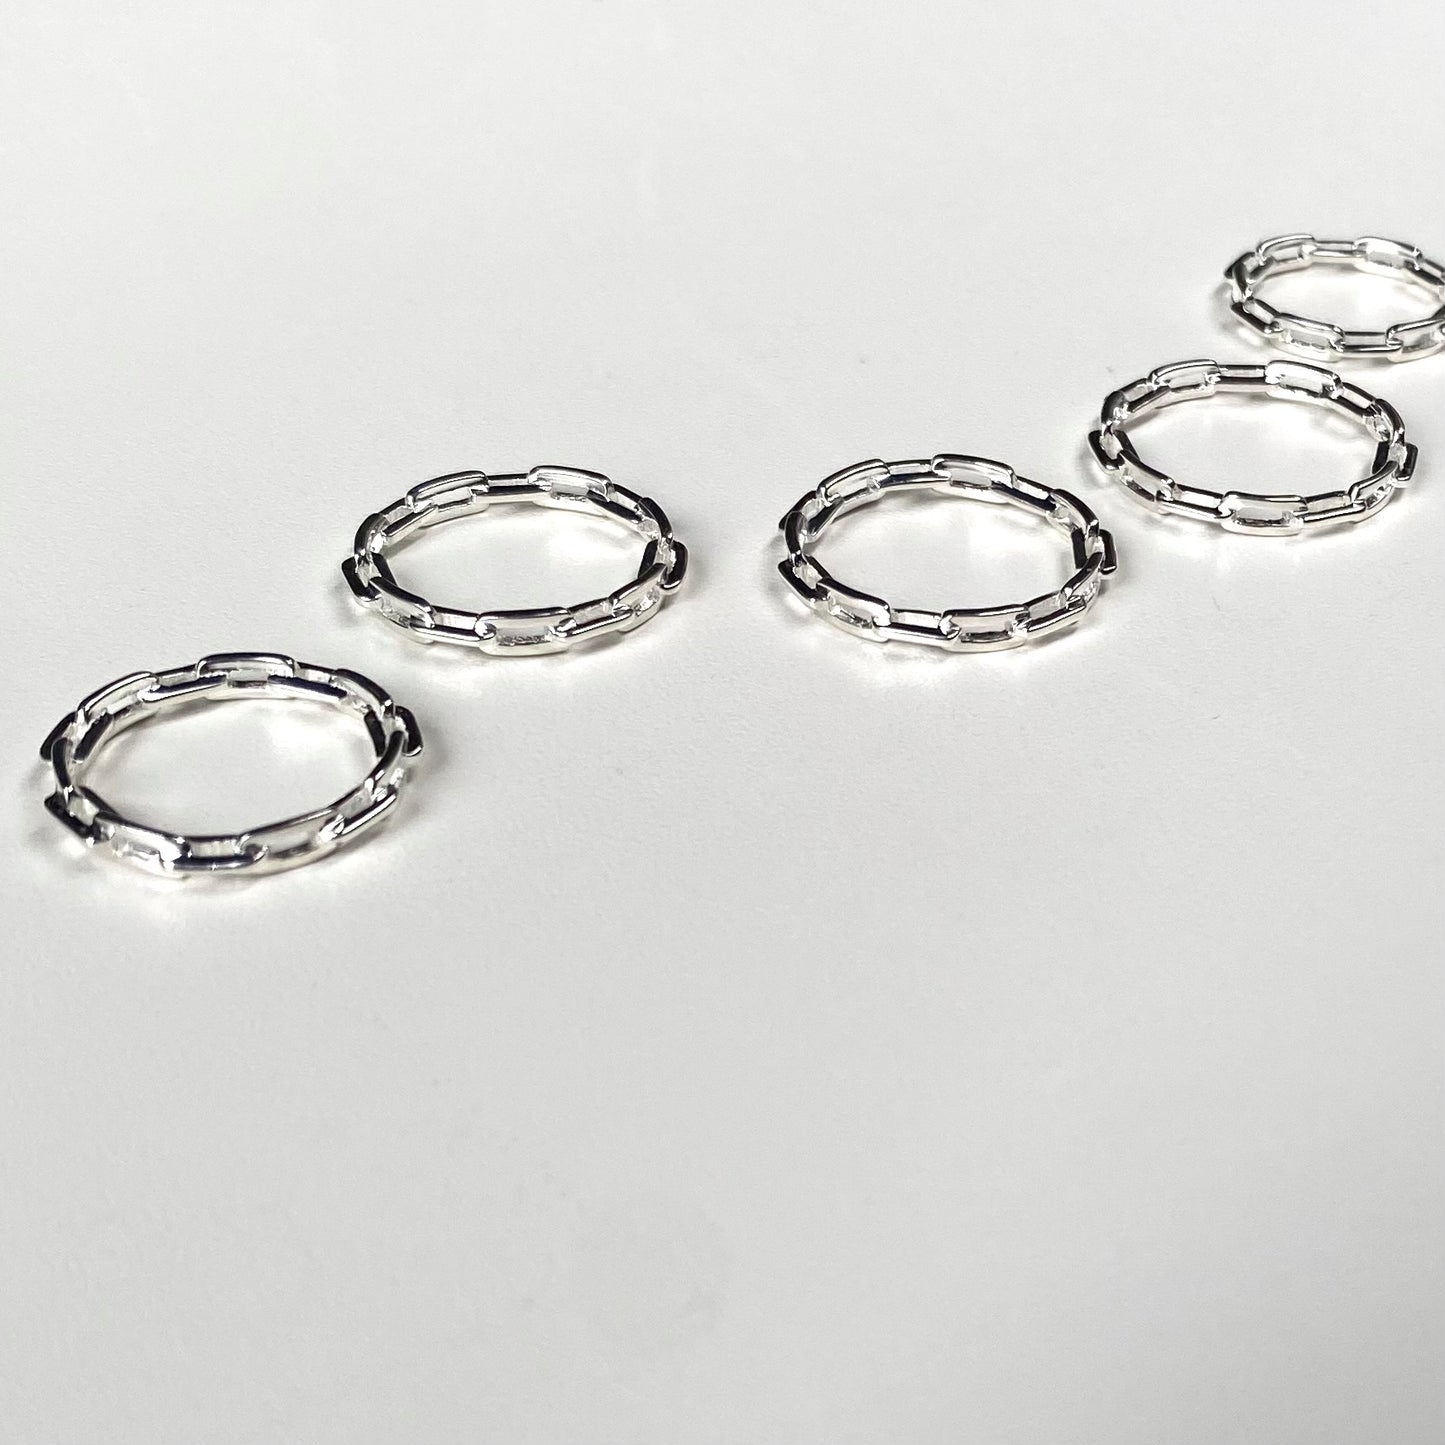 Silver925 plain ring 3